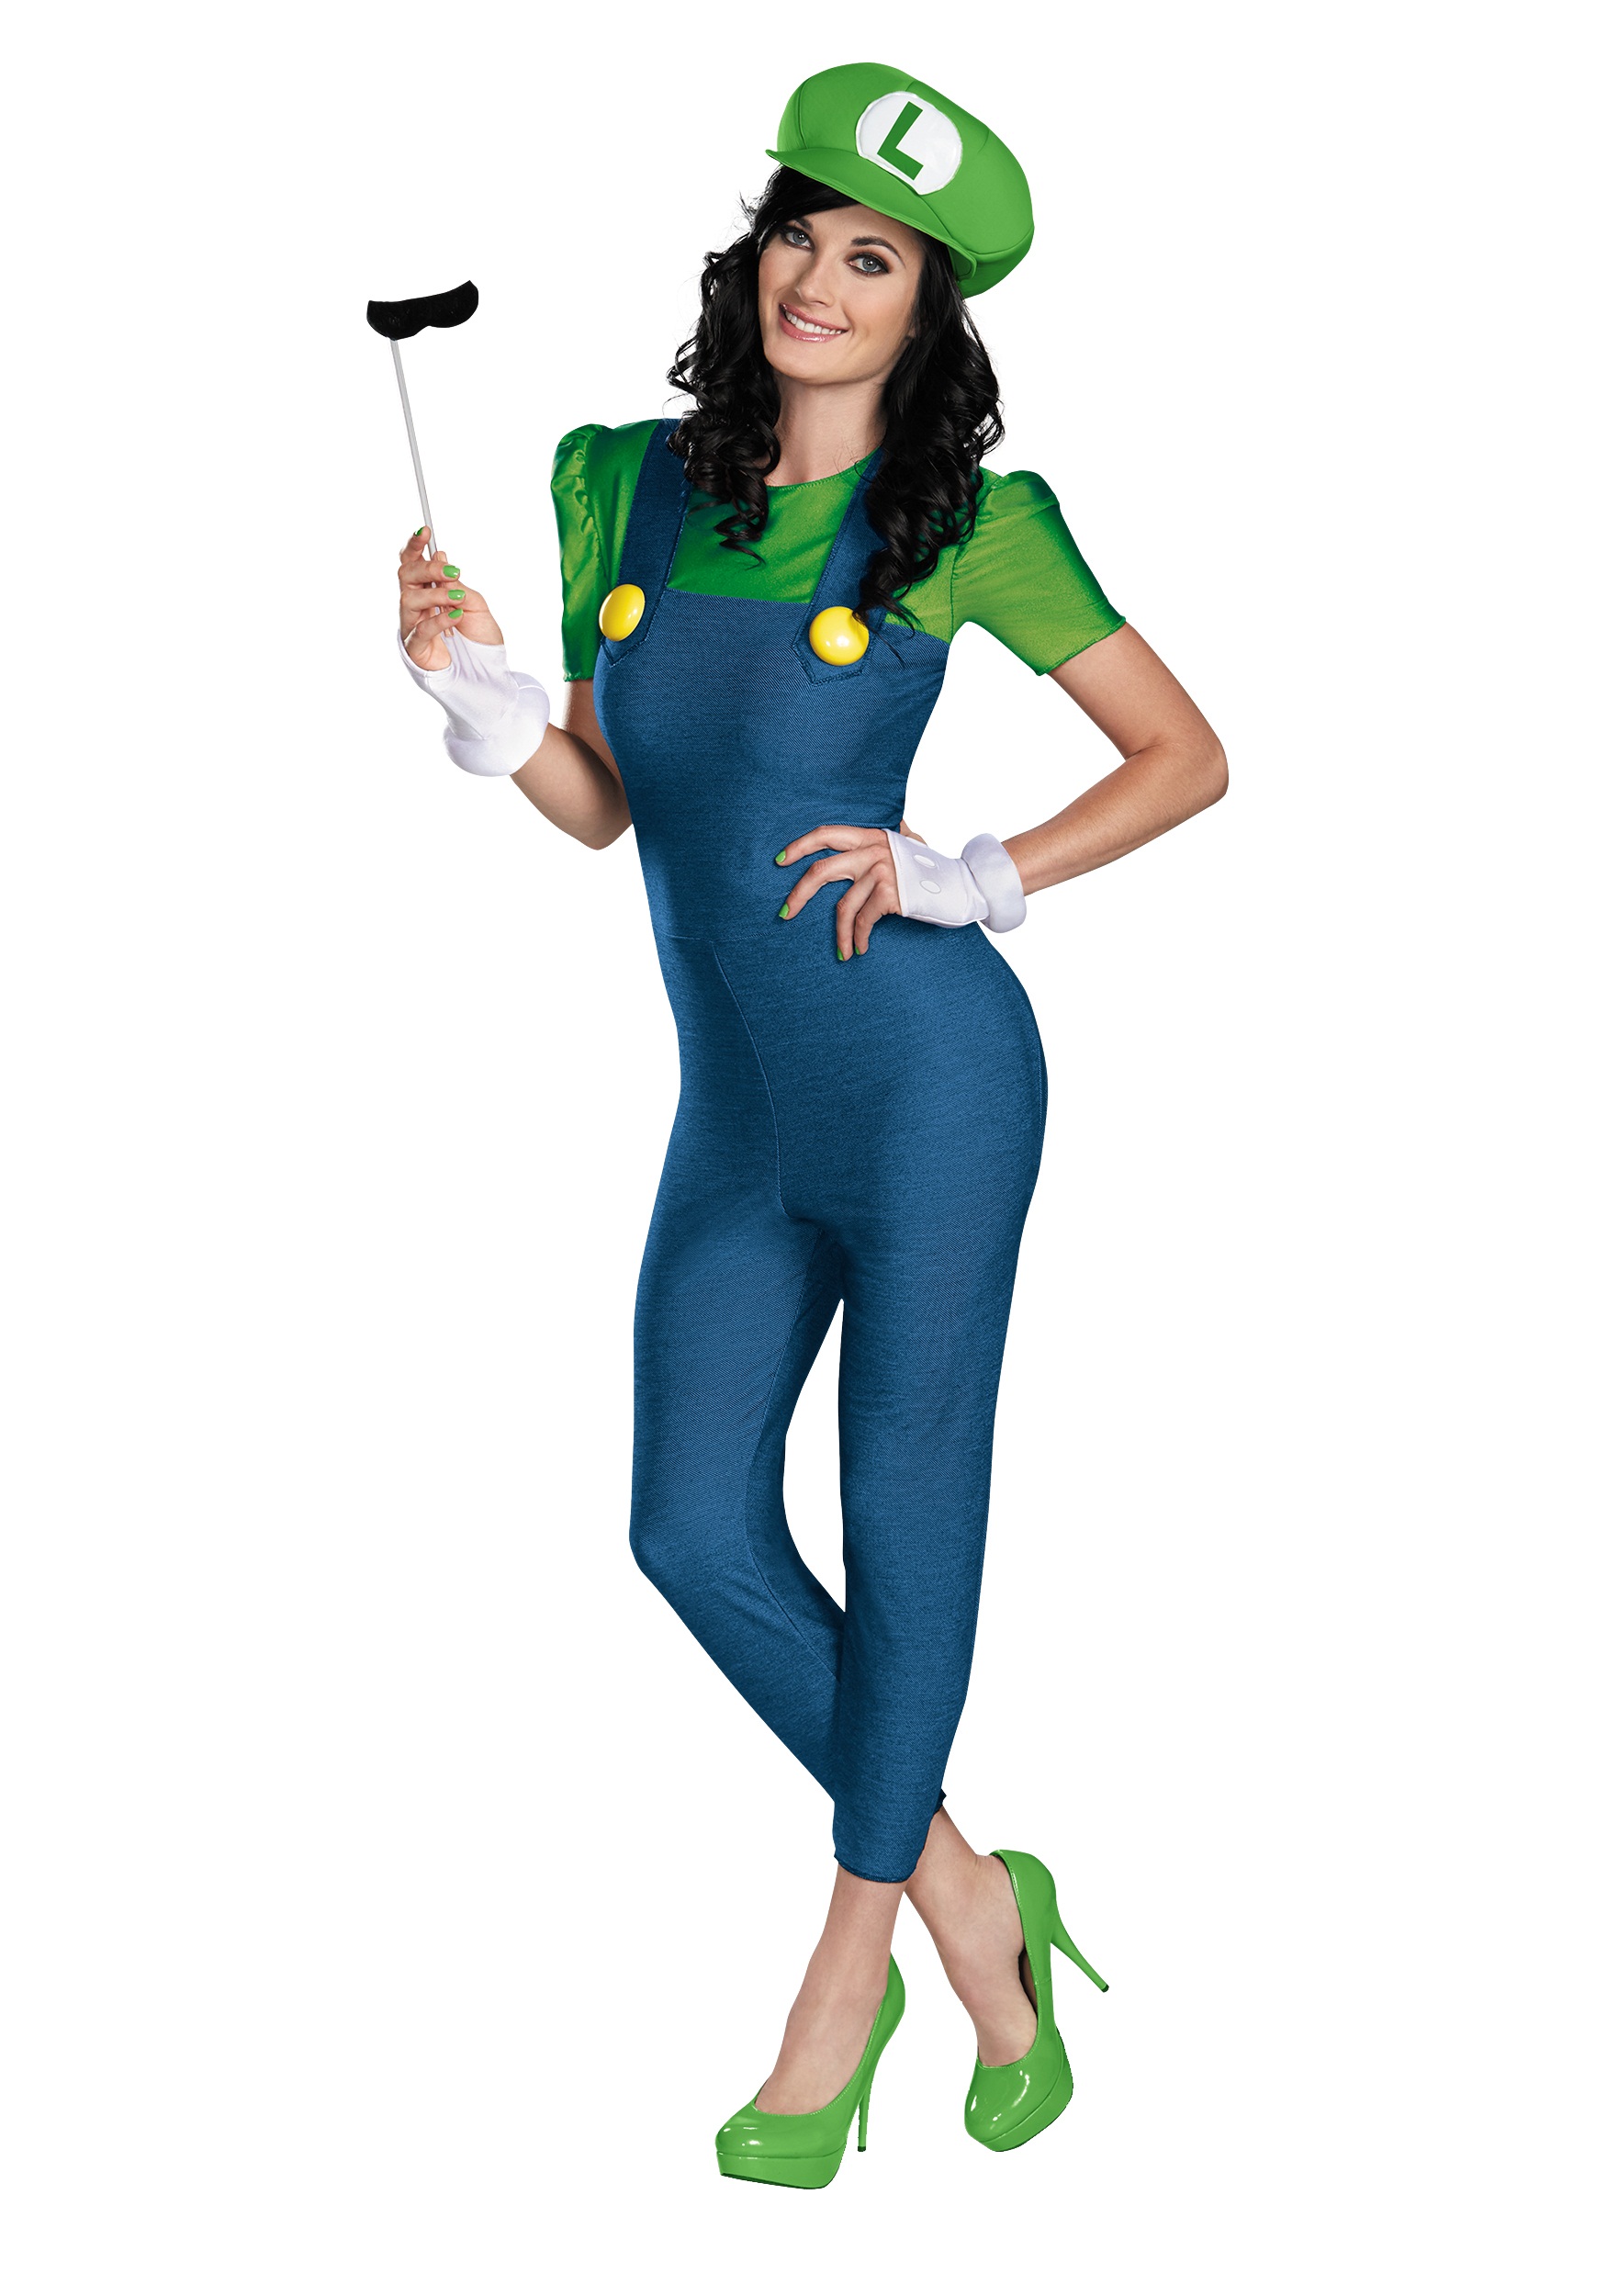 Luigi's mansion halloween costume